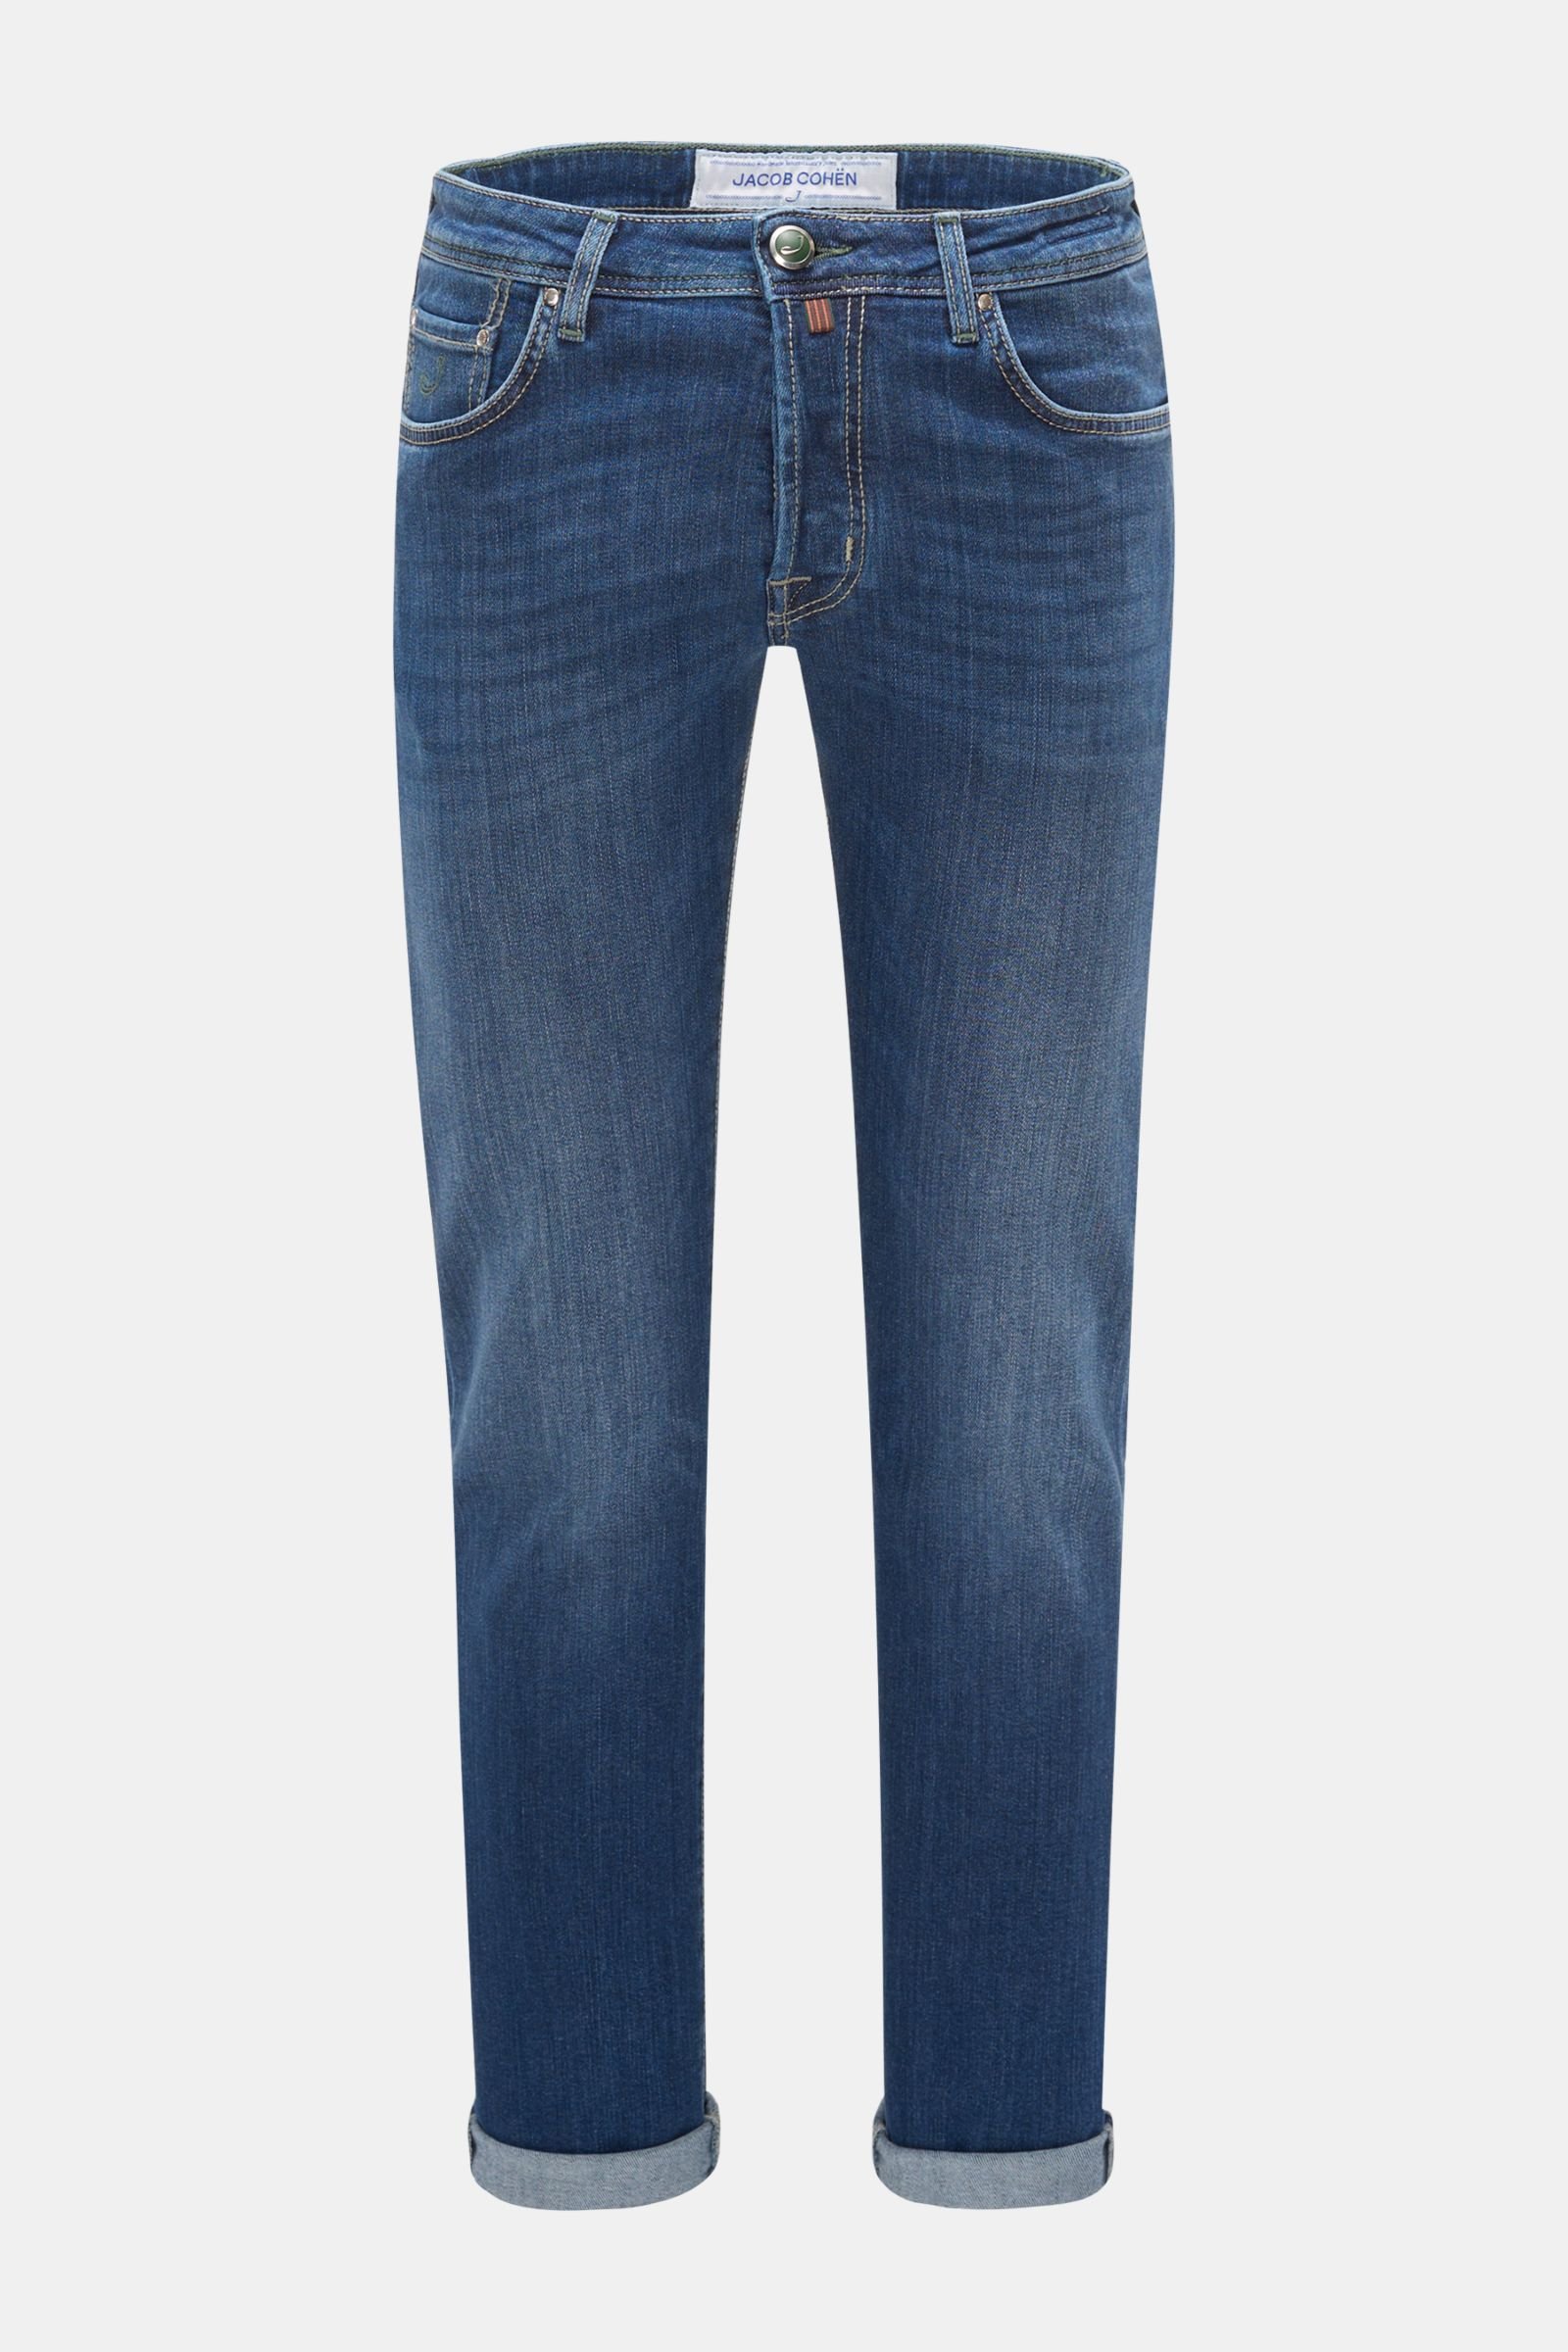 Jeans 'J688 Comfort Extra Slim Fit' graublau